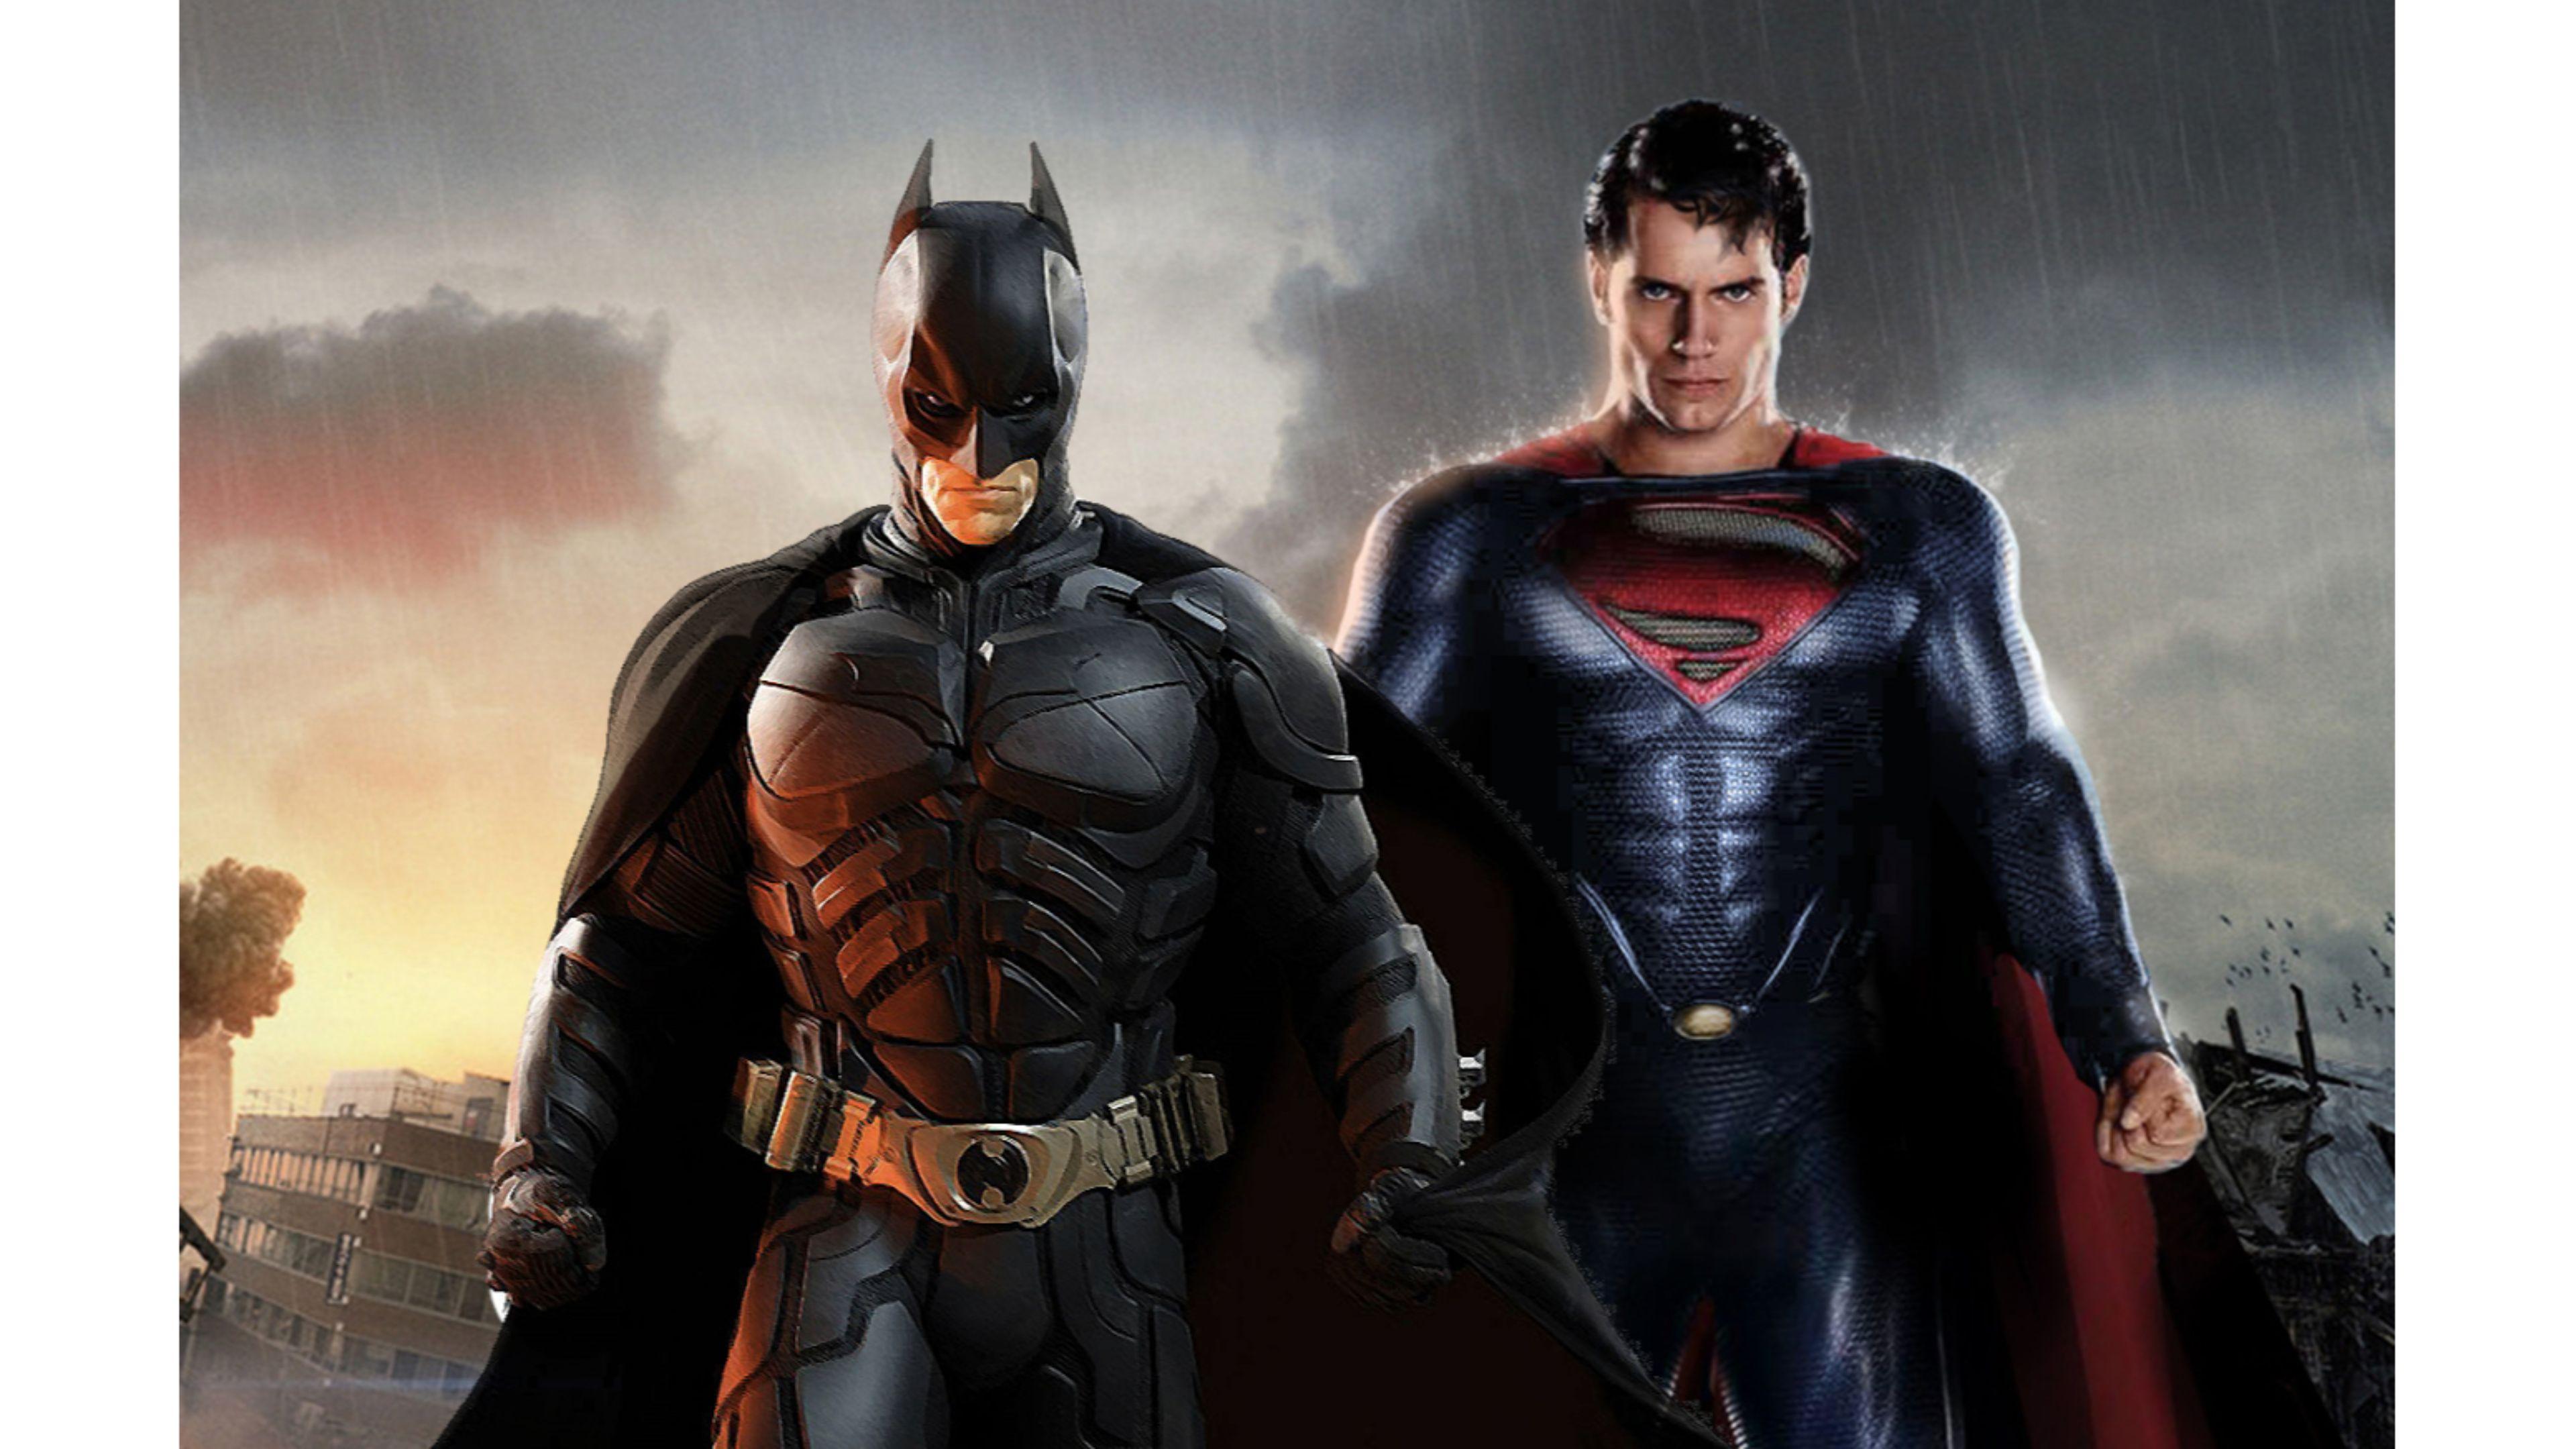 New Download Batman v Superman Movie 4K Wallpaper. Free 4K Wallpaper